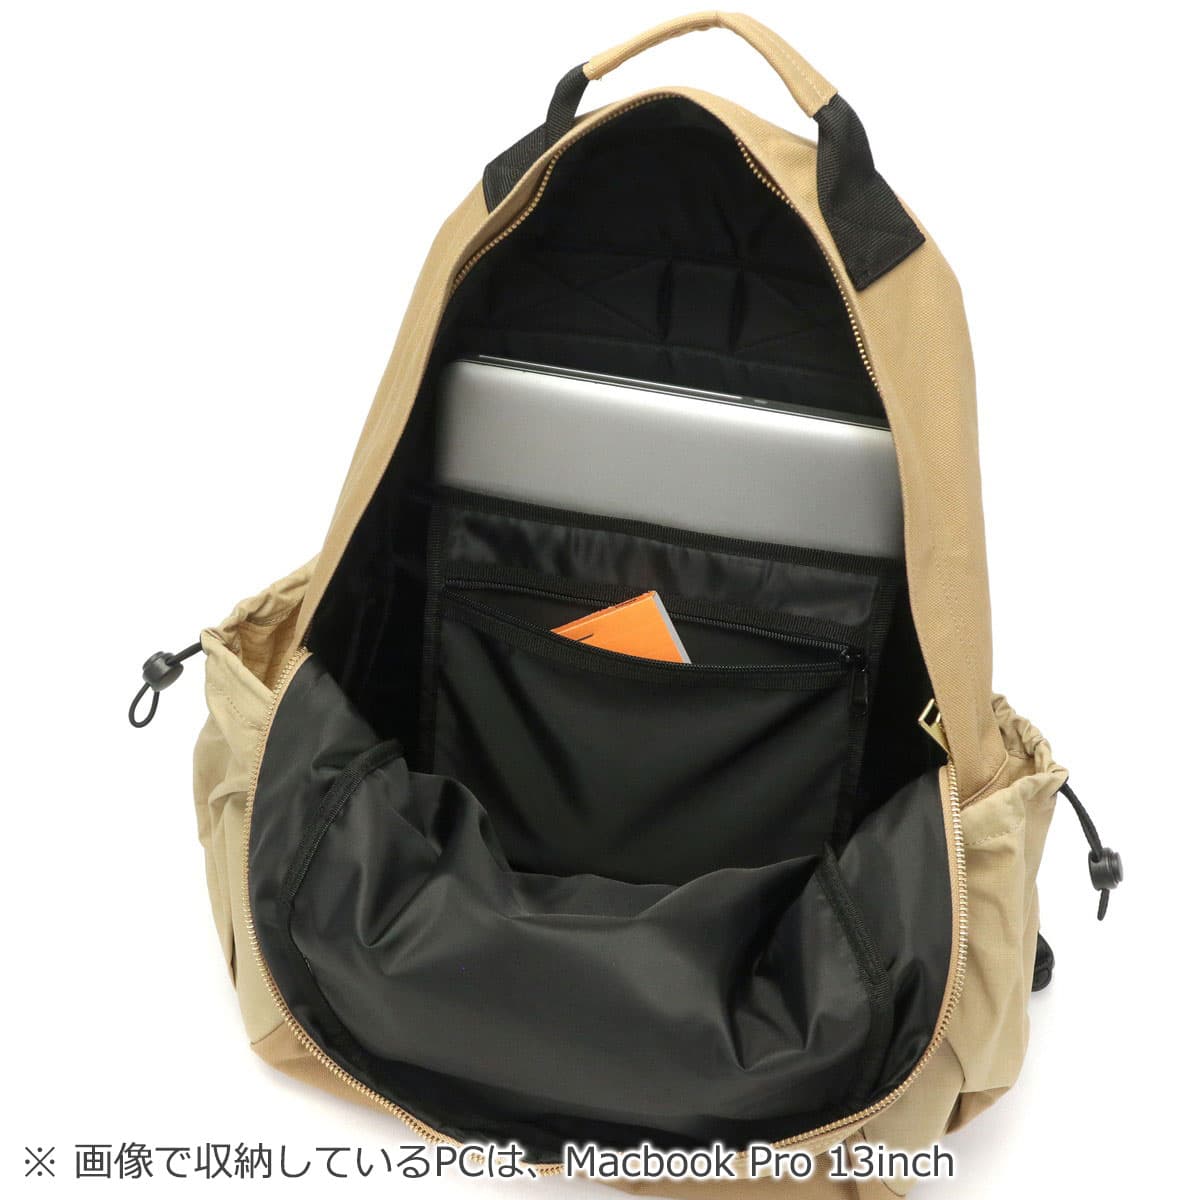 Carhartt WIP Medley Unisex Backpack Negro I030117-89XX